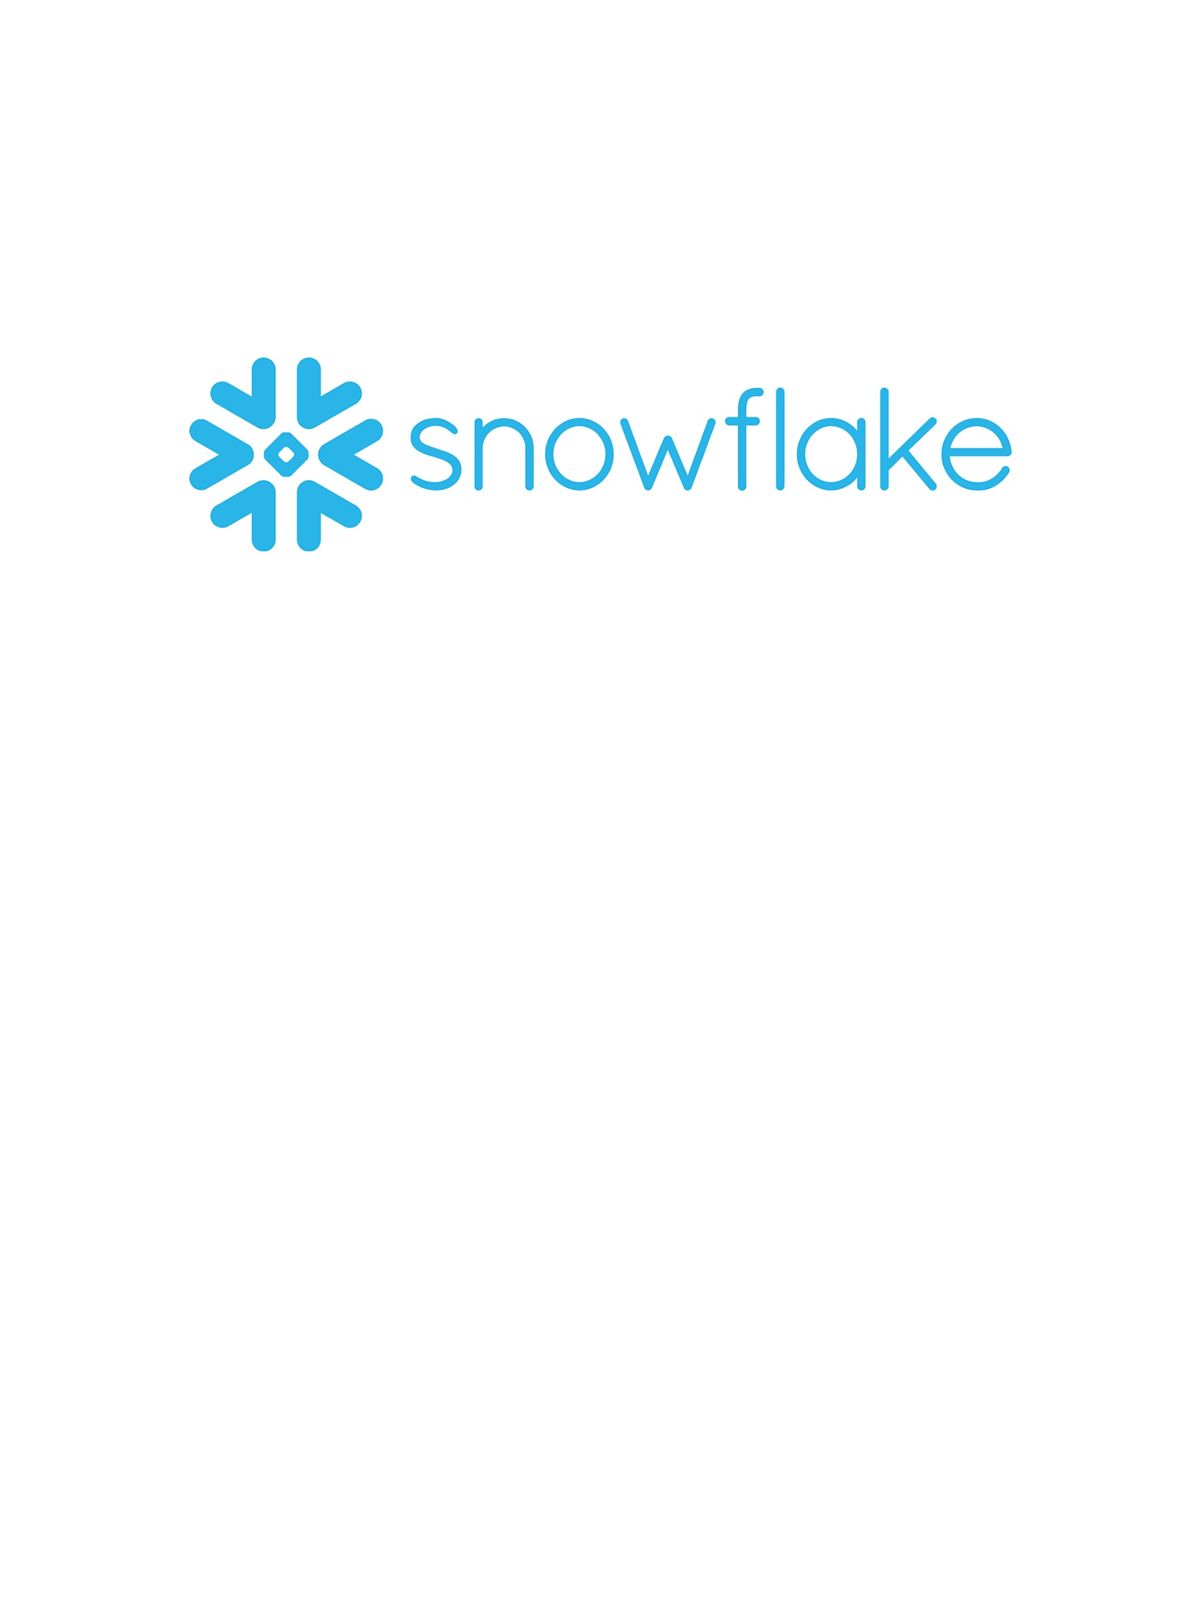 4 Weeks Snowflake cloud data platform Training Course San Francisco